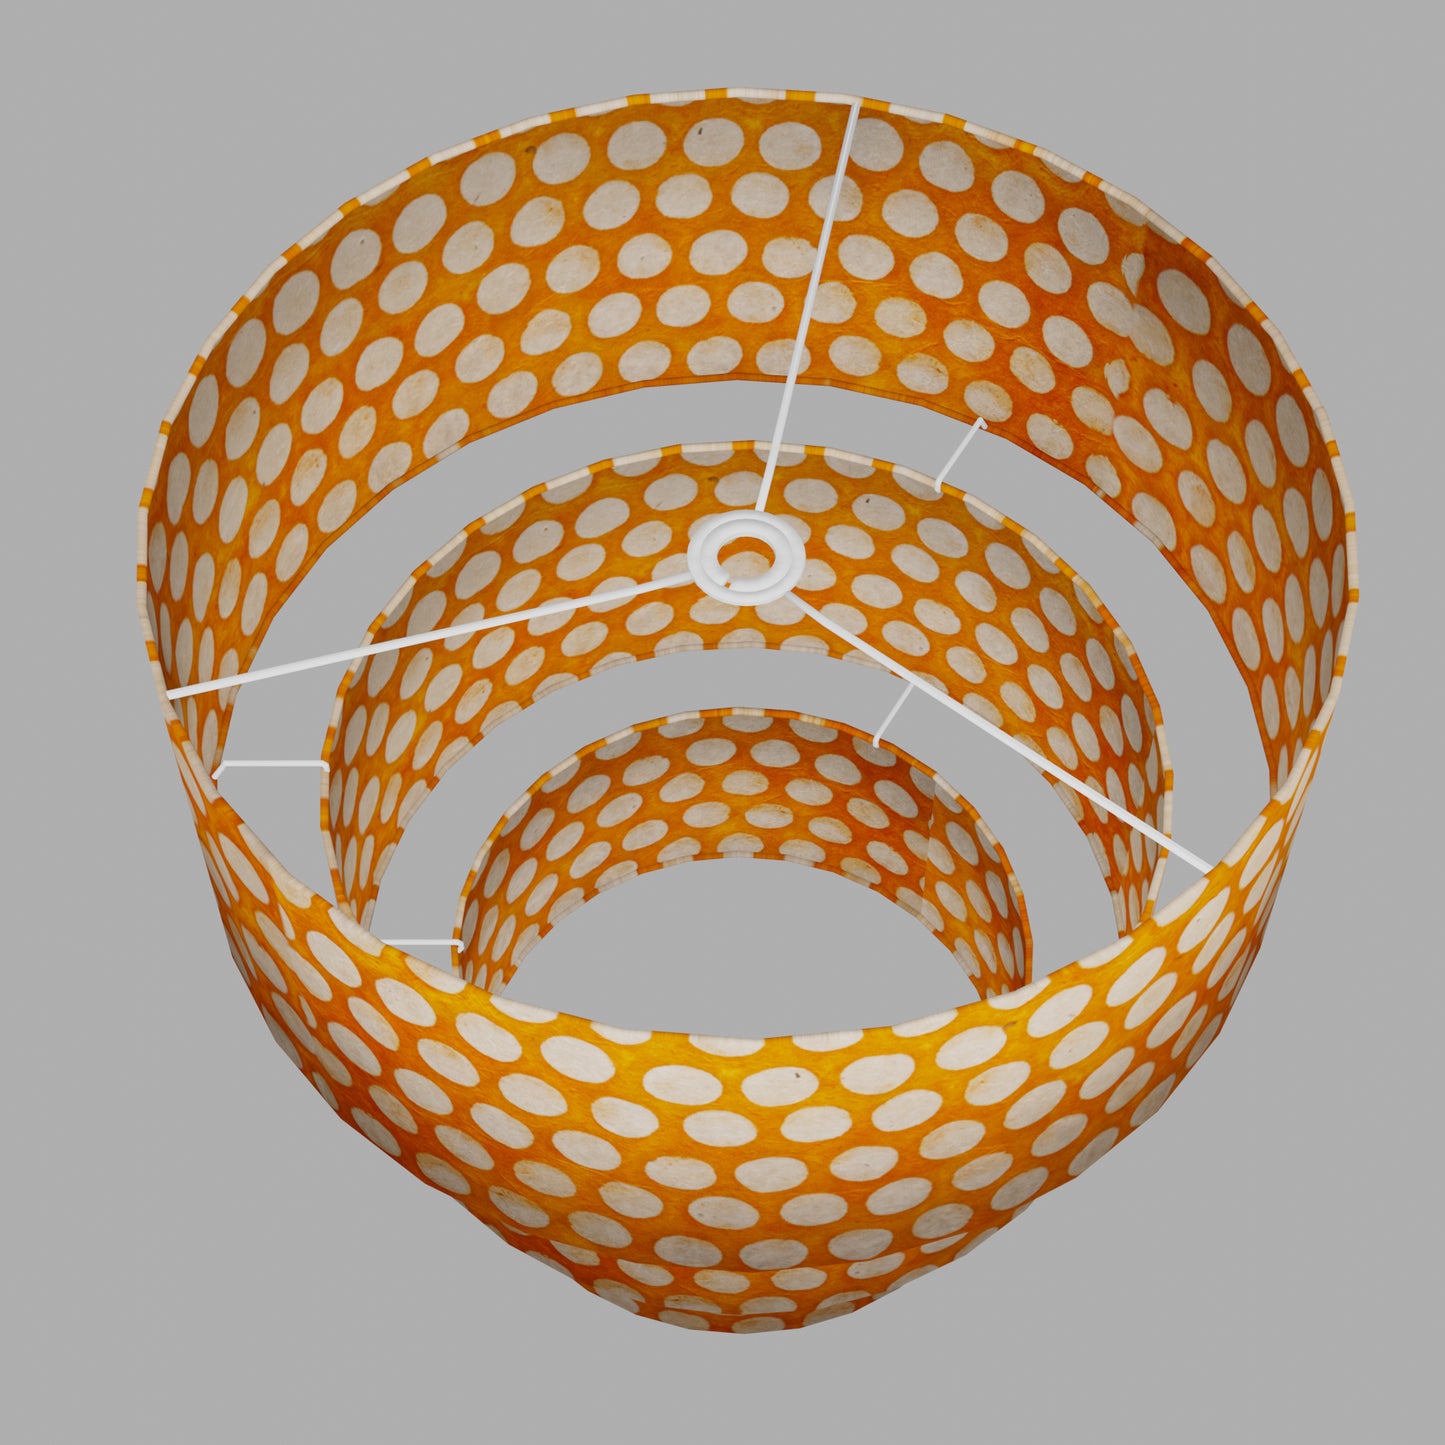 3 Tier Lamp Shade - B110 ~ Batik Dots on Orange 50cm x 20cm, 40cm x 17.5cm & 30cm x 15cm